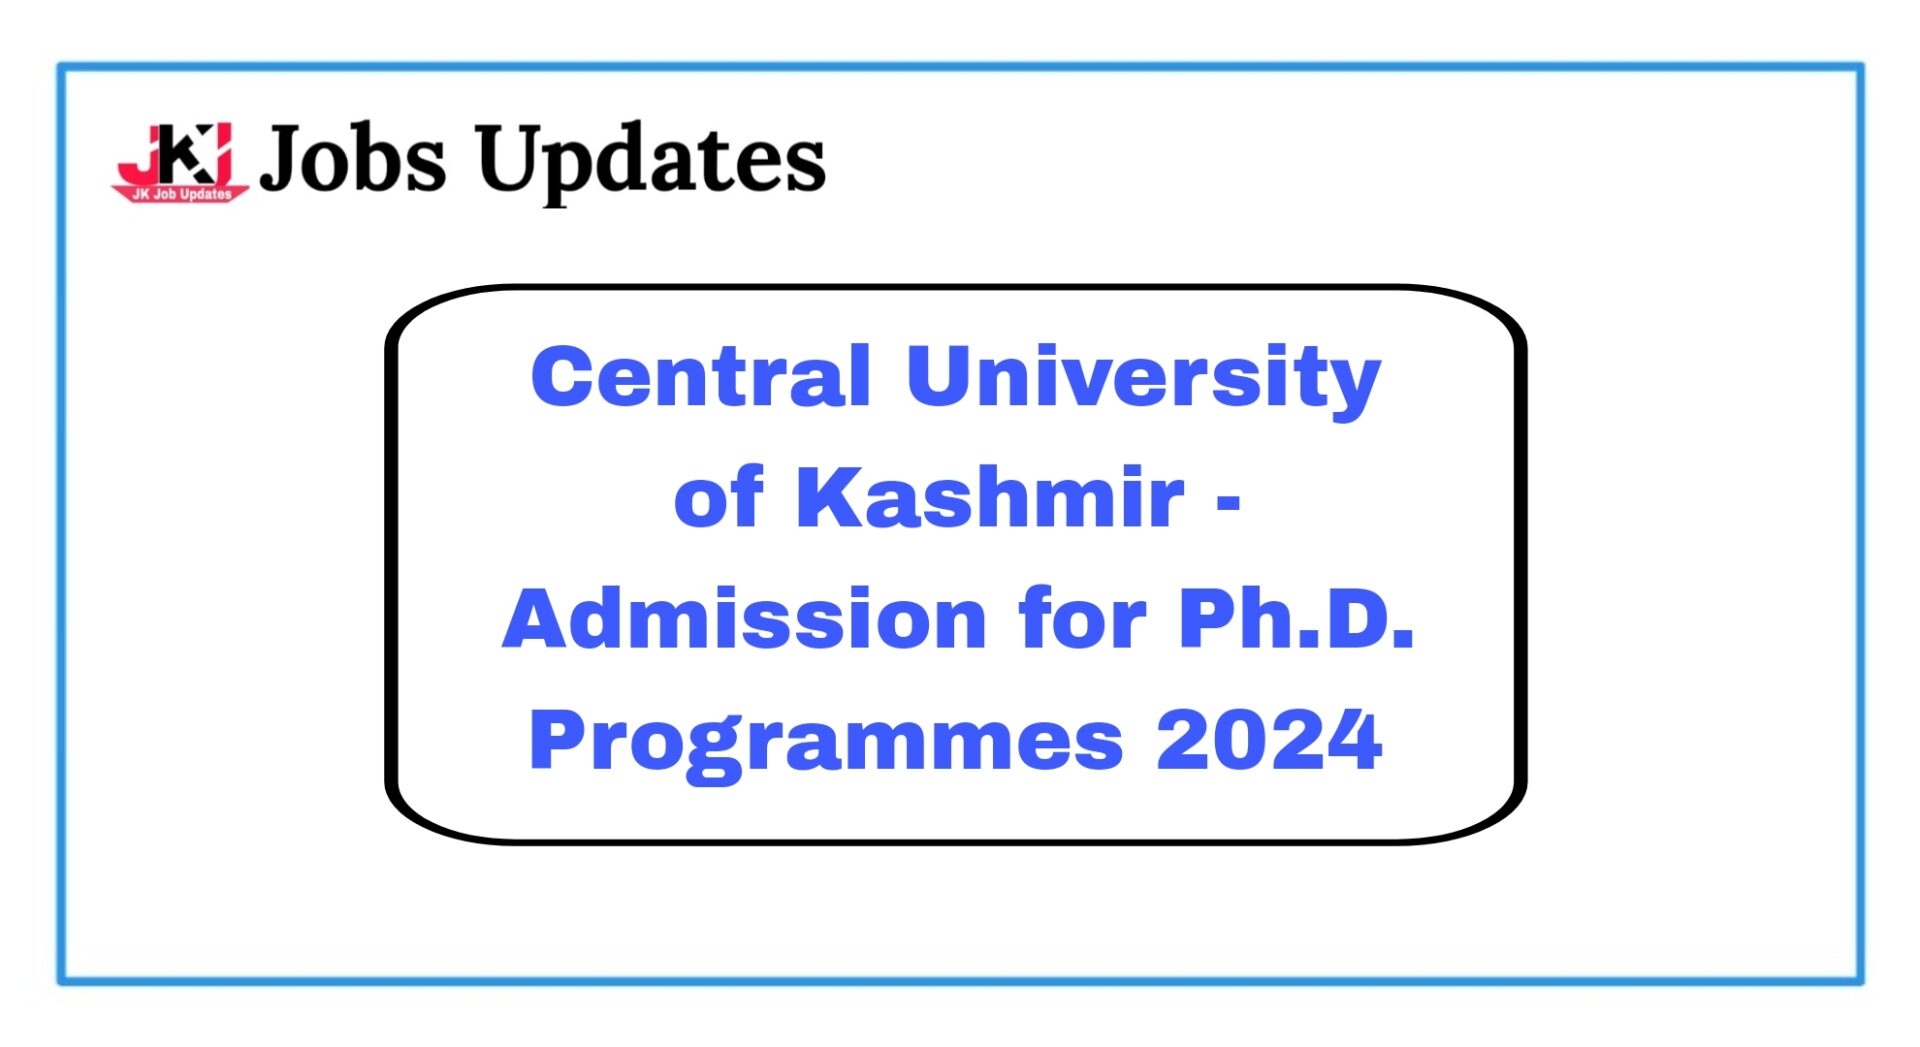 central university of kashmir admission for ph.d. programm